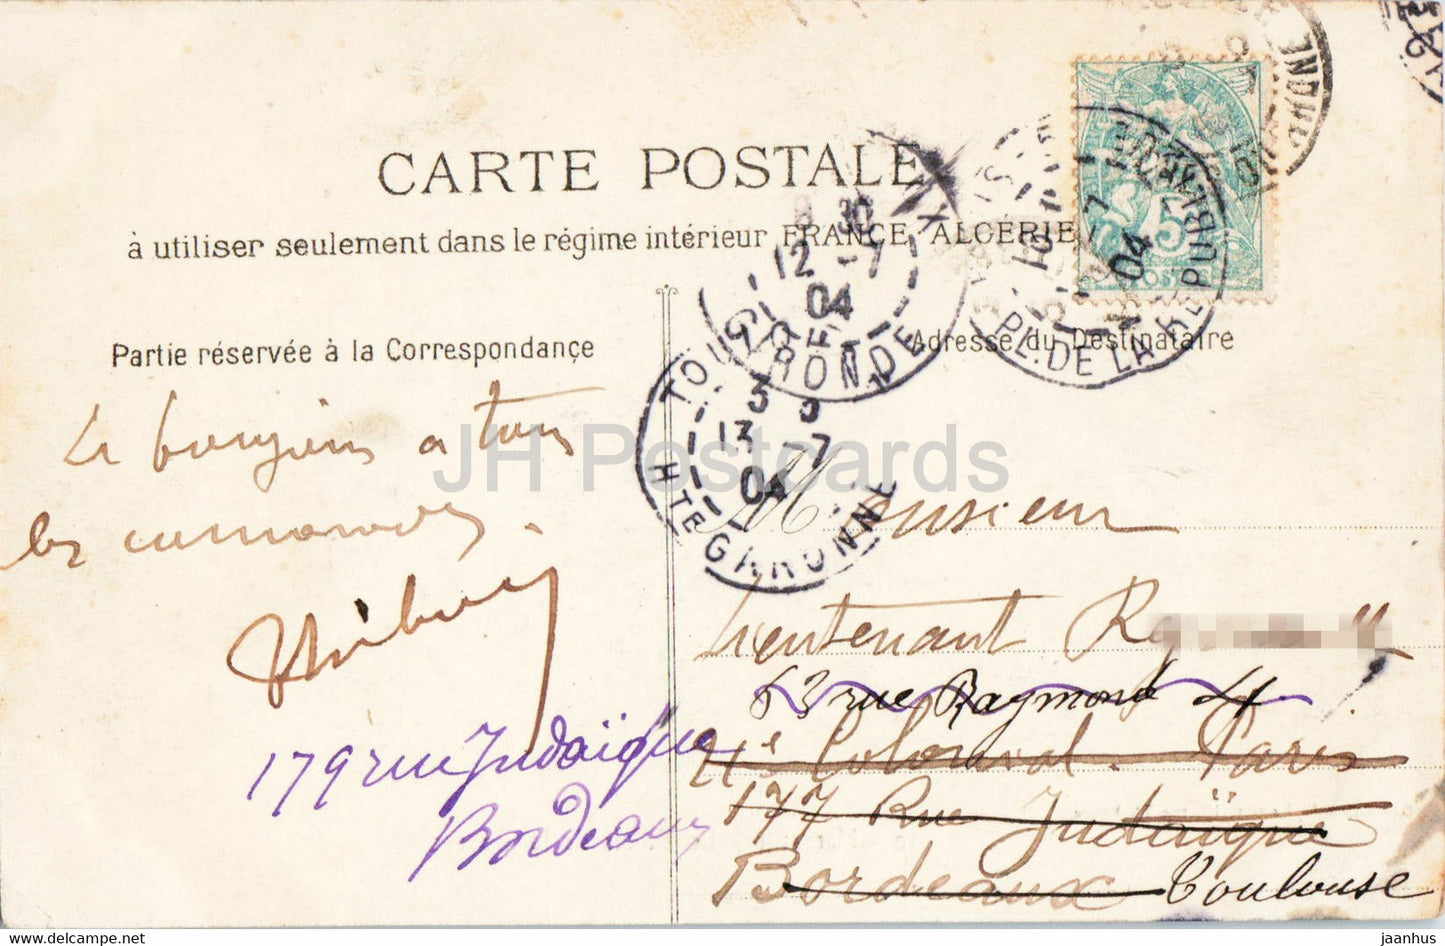 Marseille - Le Palais de La Bourse - 10 - Straßenbahn - alte Postkarte - 1904 - Frankreich - gebraucht